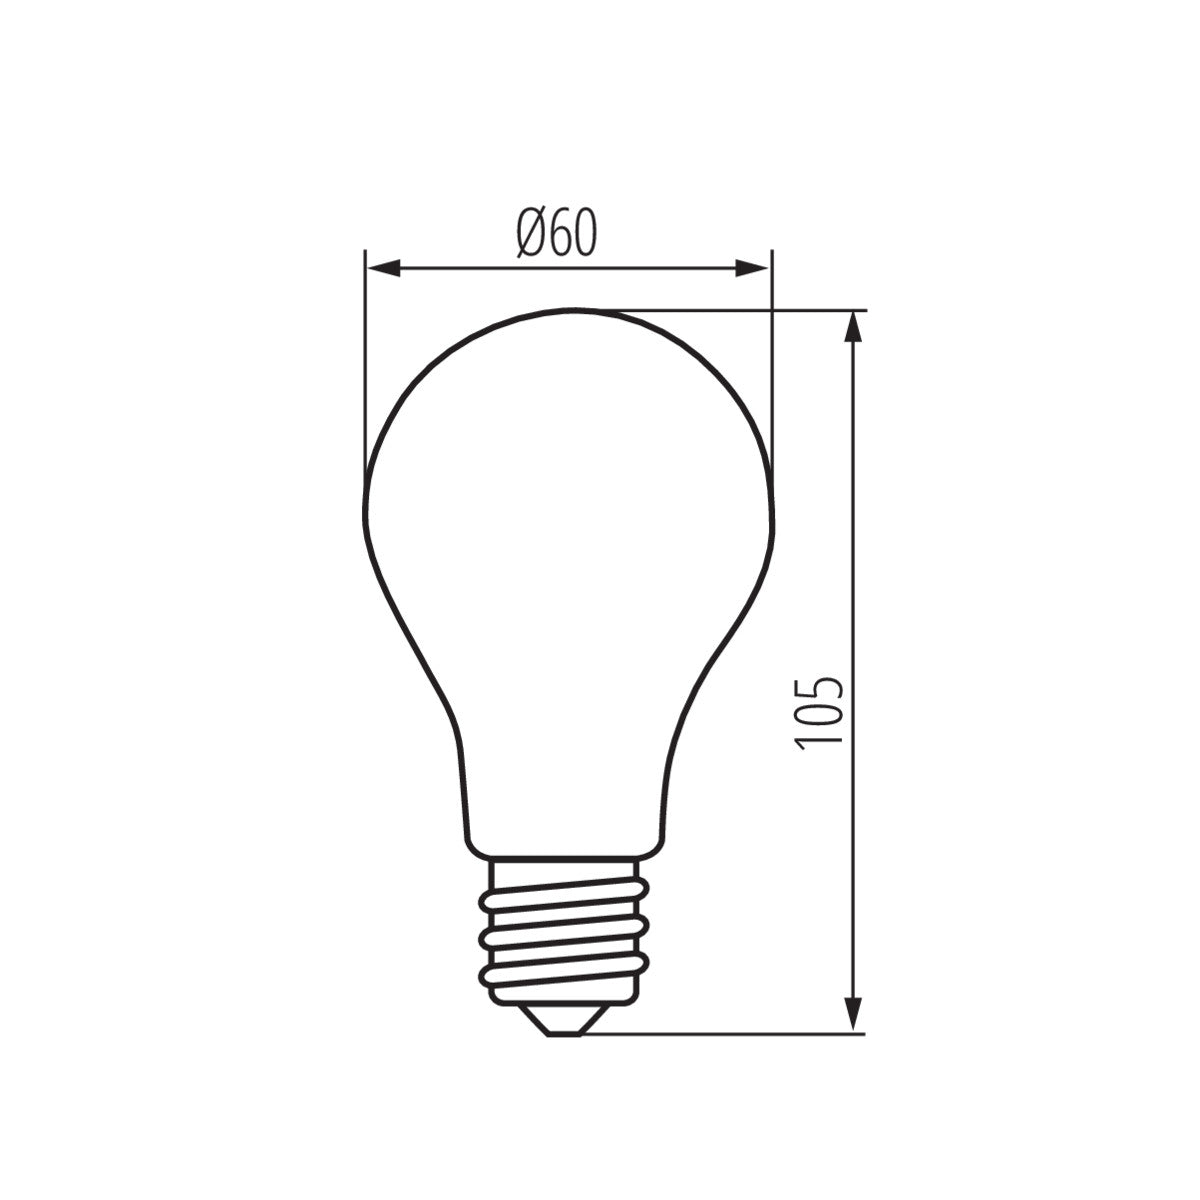 Kanlux XLED A60 10W E27 GLS LED Filament Light Bulb